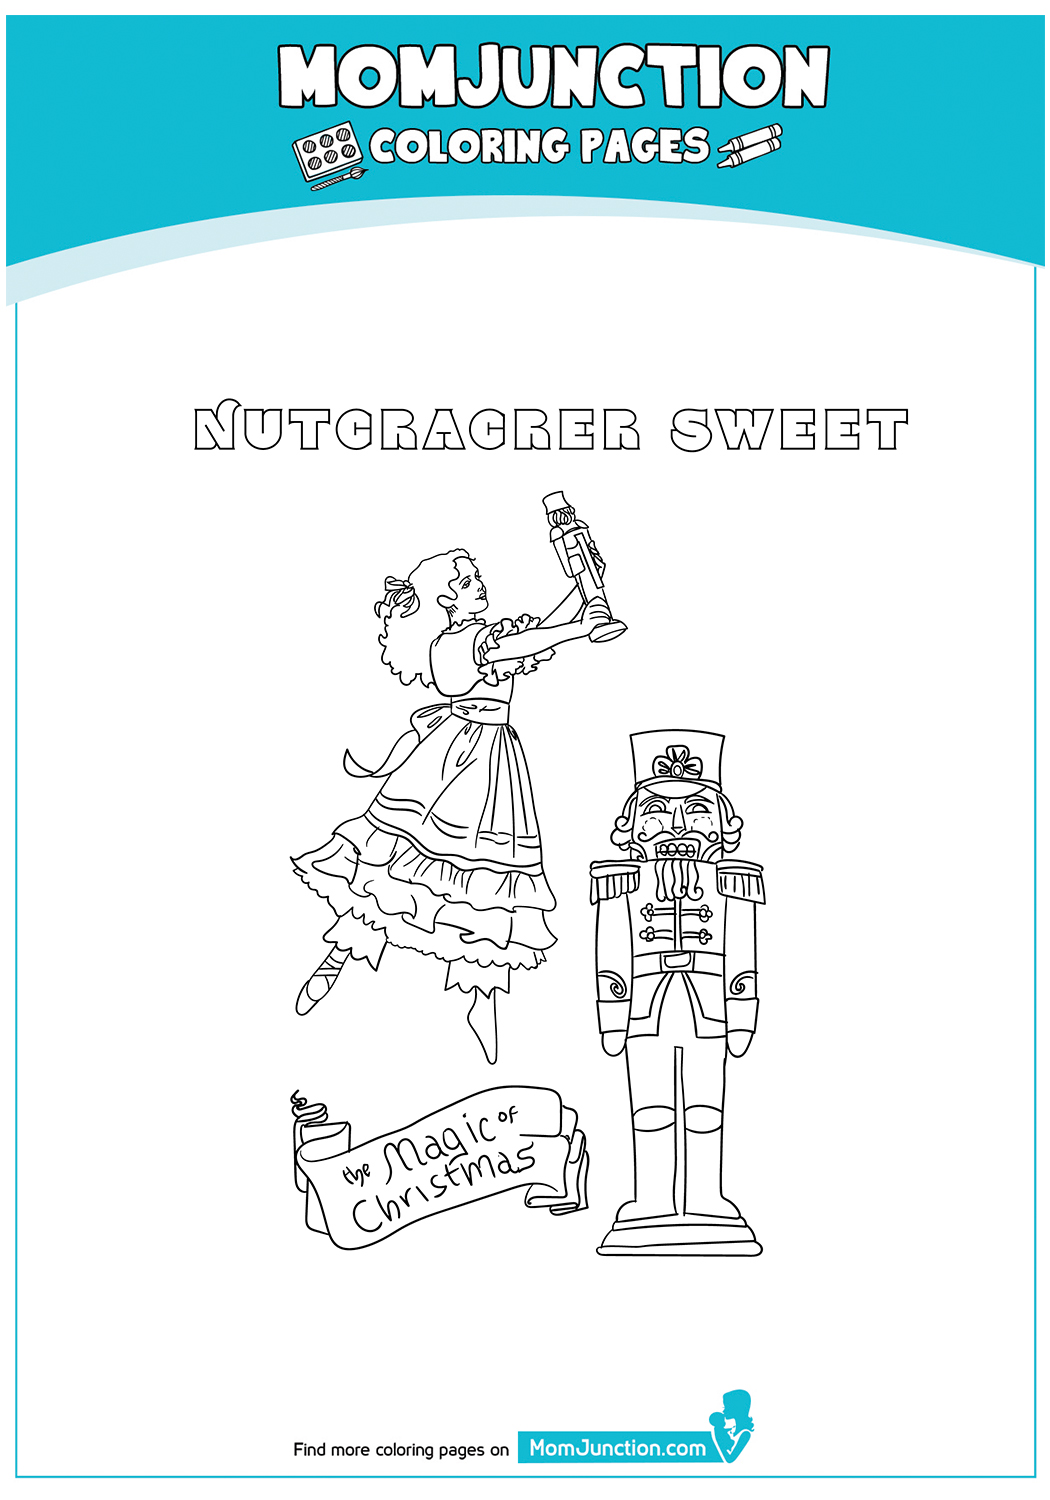 The-Nutcracker-Sweets-17